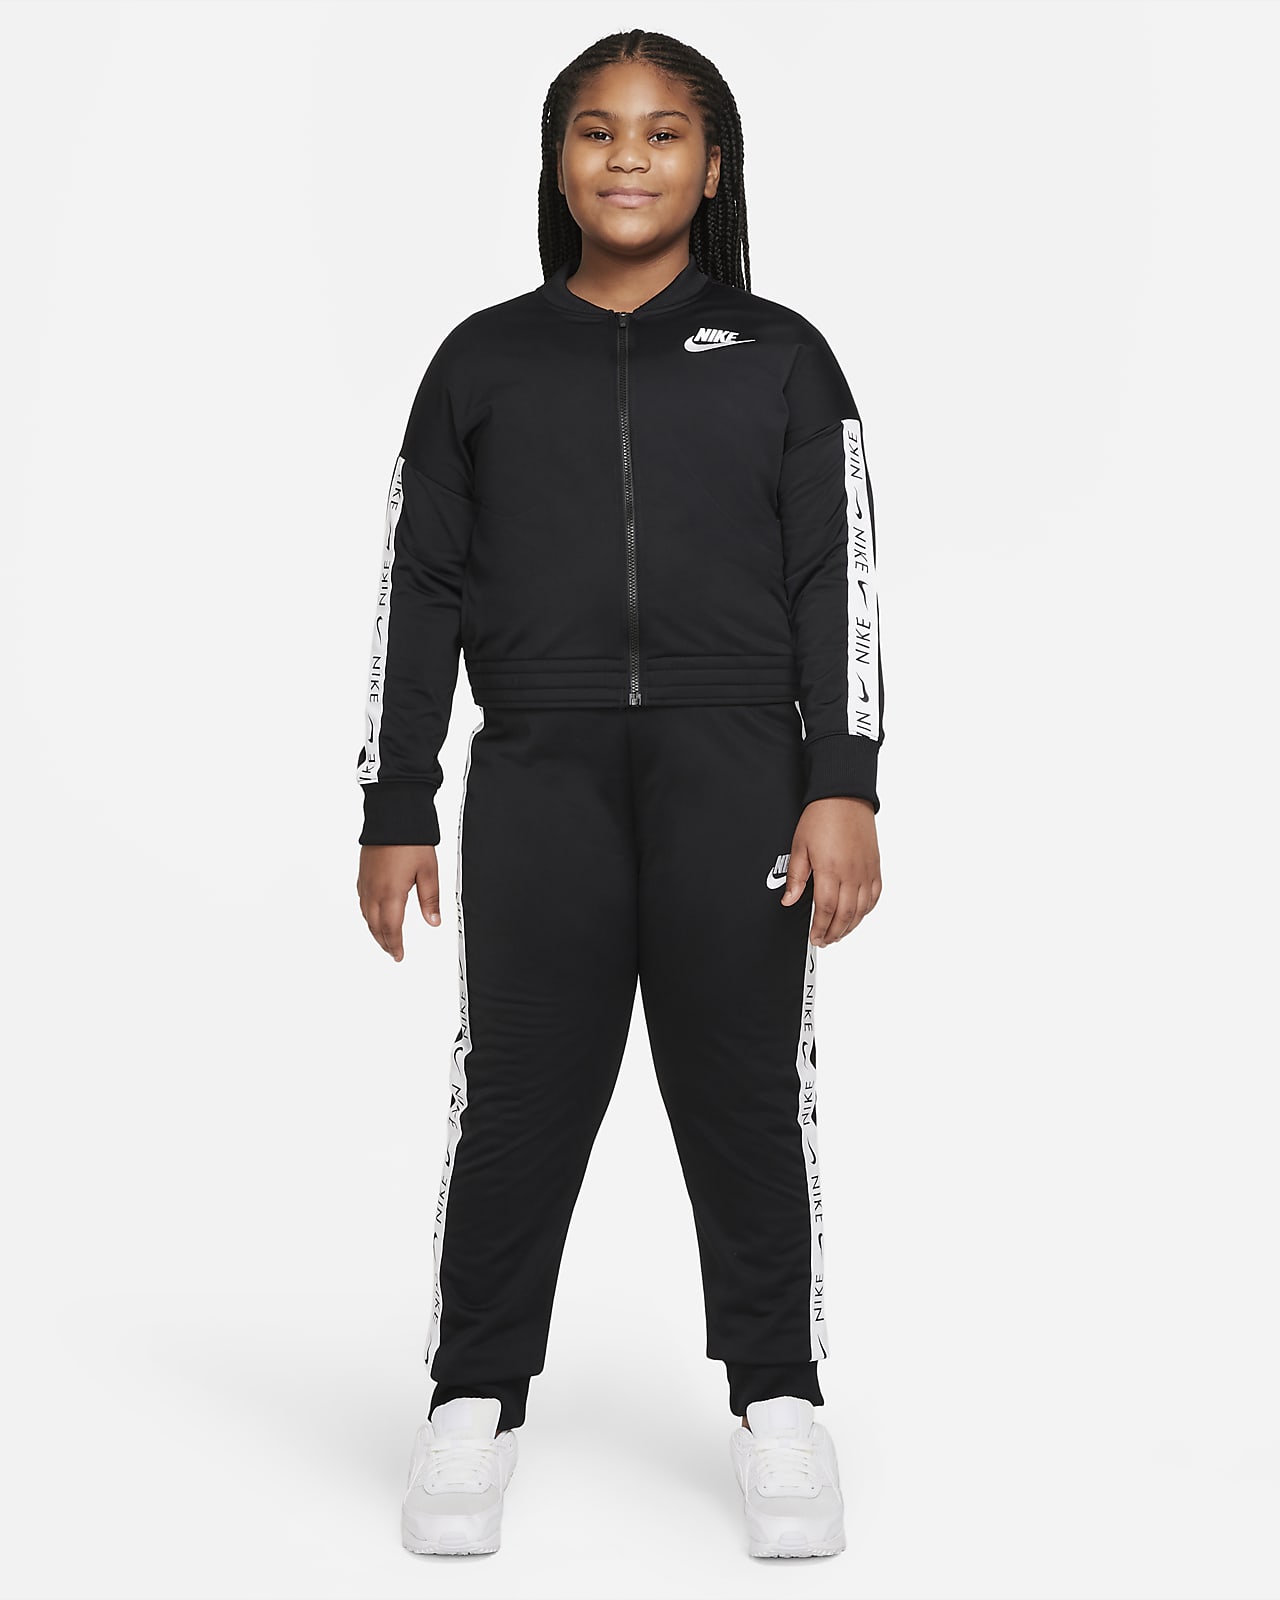 Sportswear (Talla grande) Niño/a. Nike ES